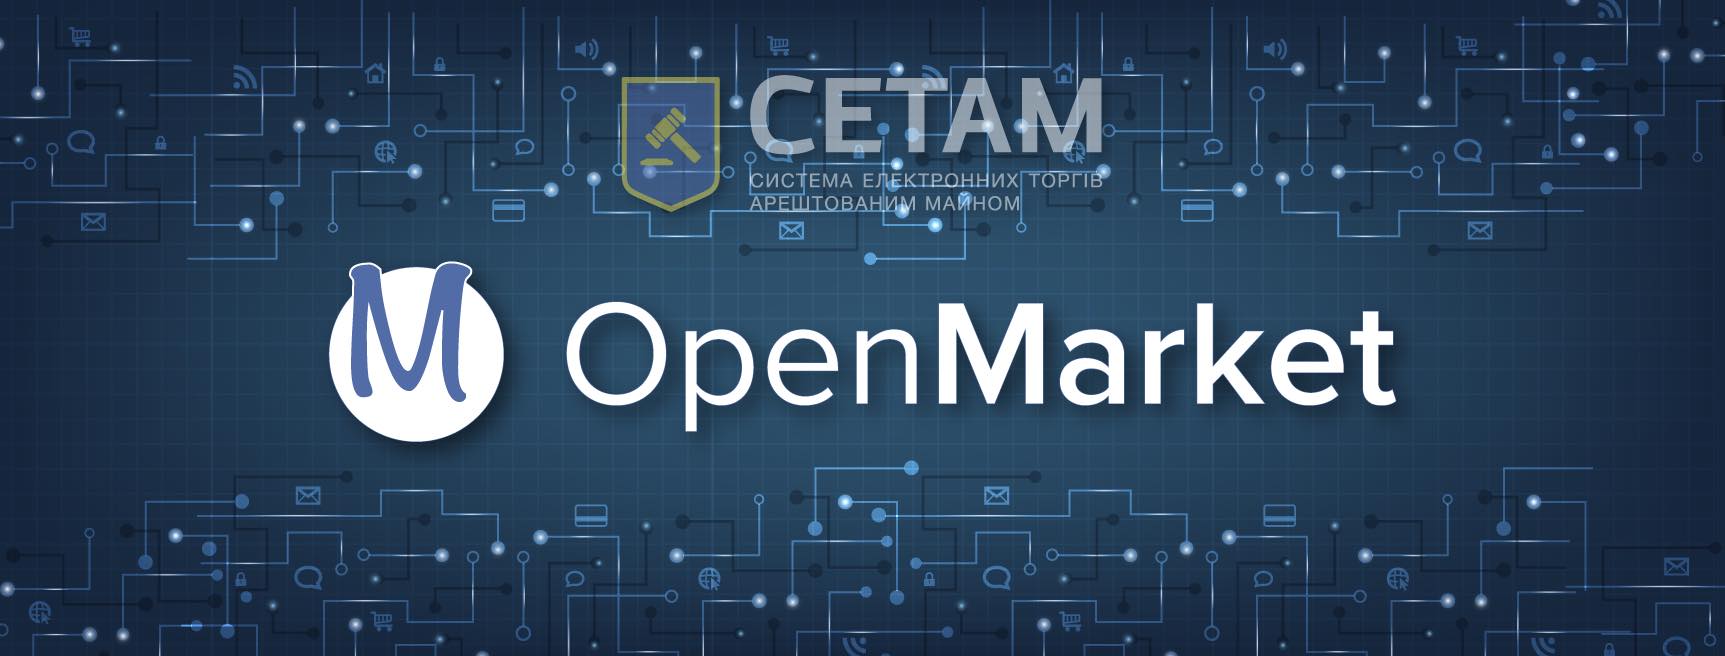 ПриватБанк виставив першу партію активів на OpenMarket (СЕТАМ) на суму 50 млн грн  - Фото